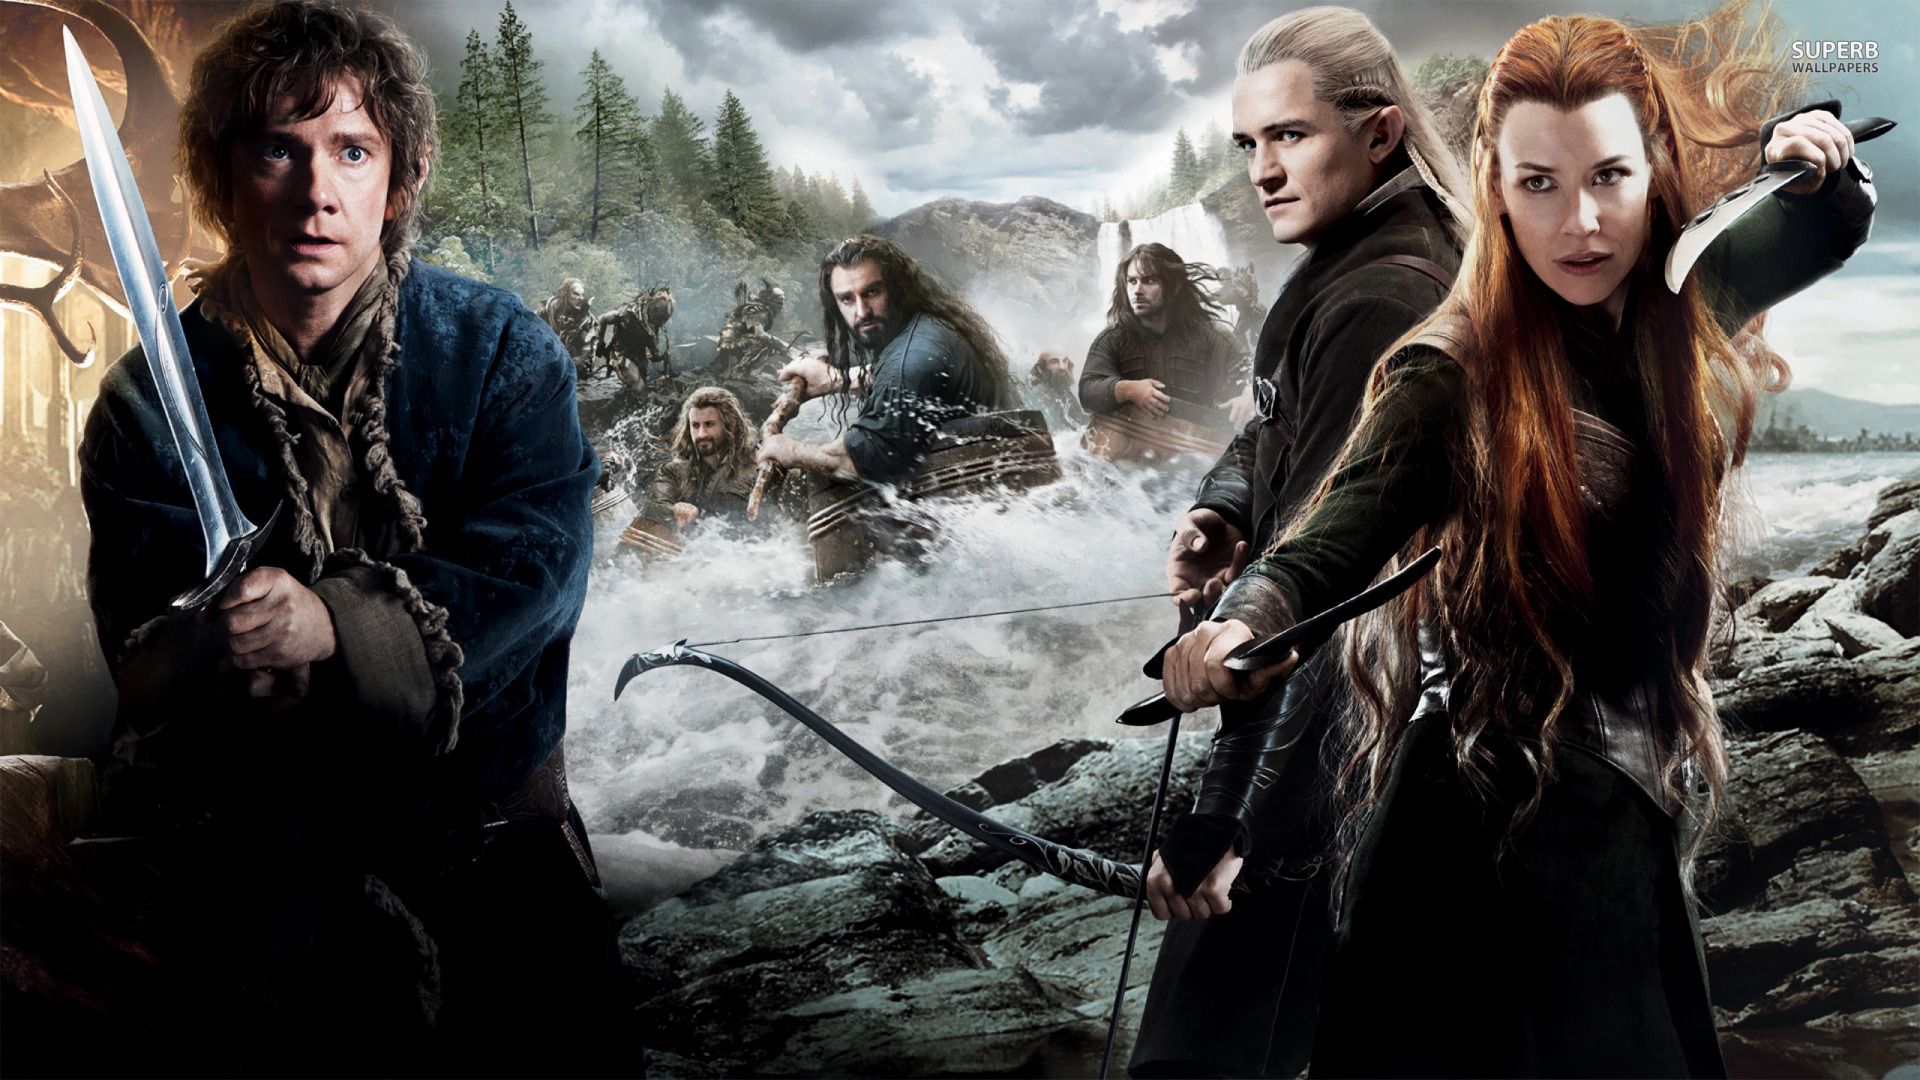 Legolas - The Hobbit: The Desolation of Smaug wallpaper - Movie ...